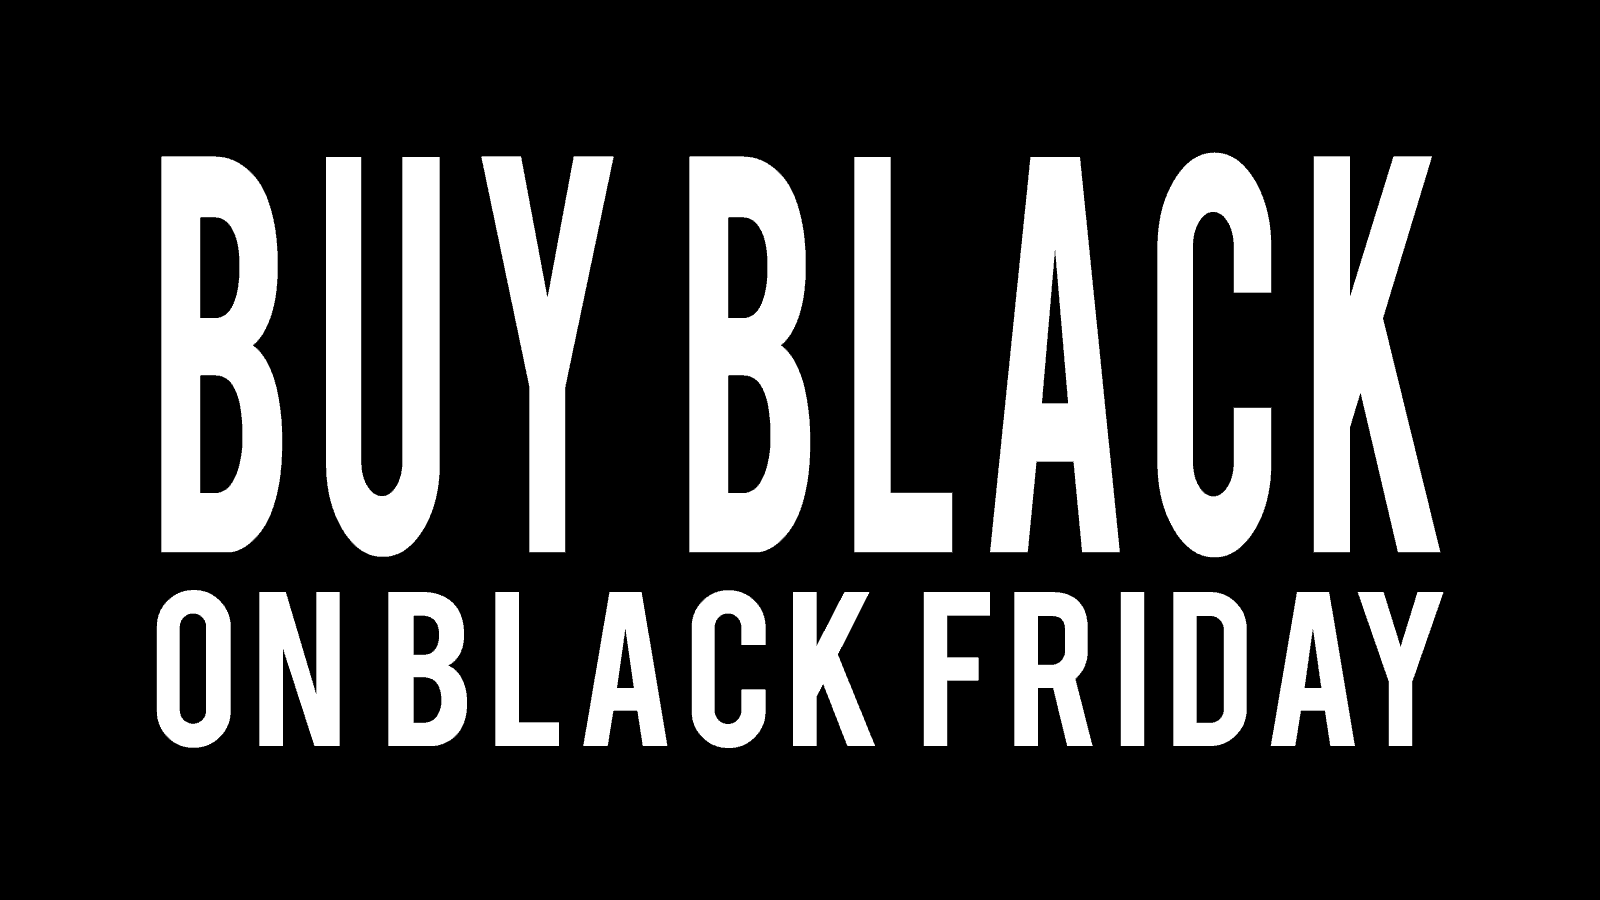 Black businesses, Black Friday